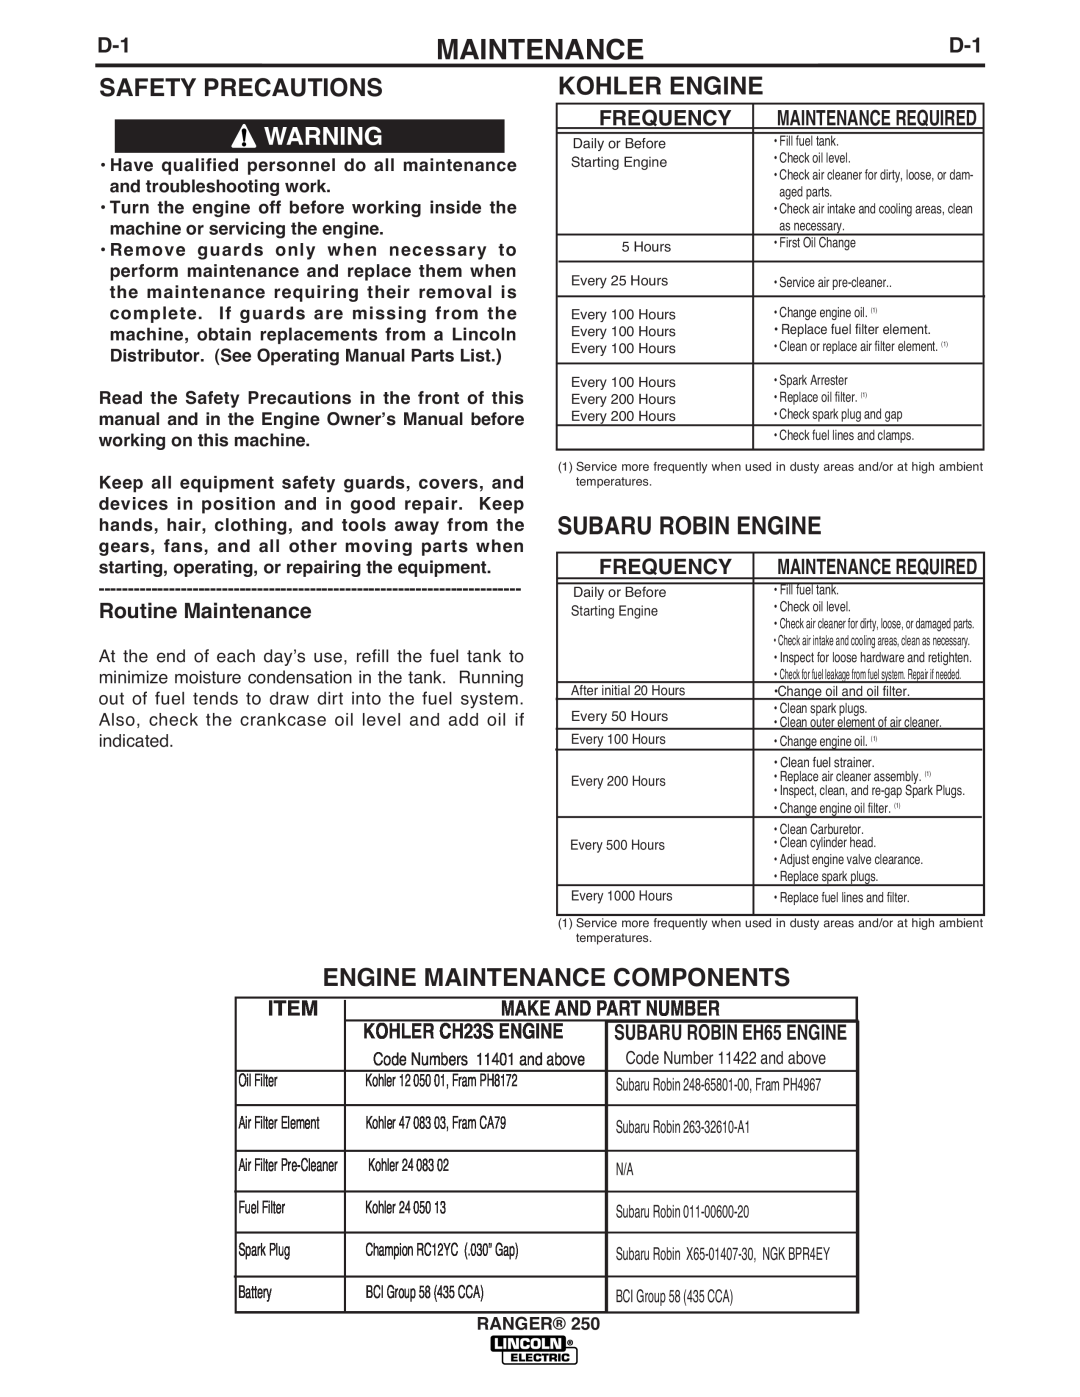 Lincoln Electric IM919 manual Kohler Engine, Subaru Robin Engine, Engine Maintenance Components, Routine Maintenance 